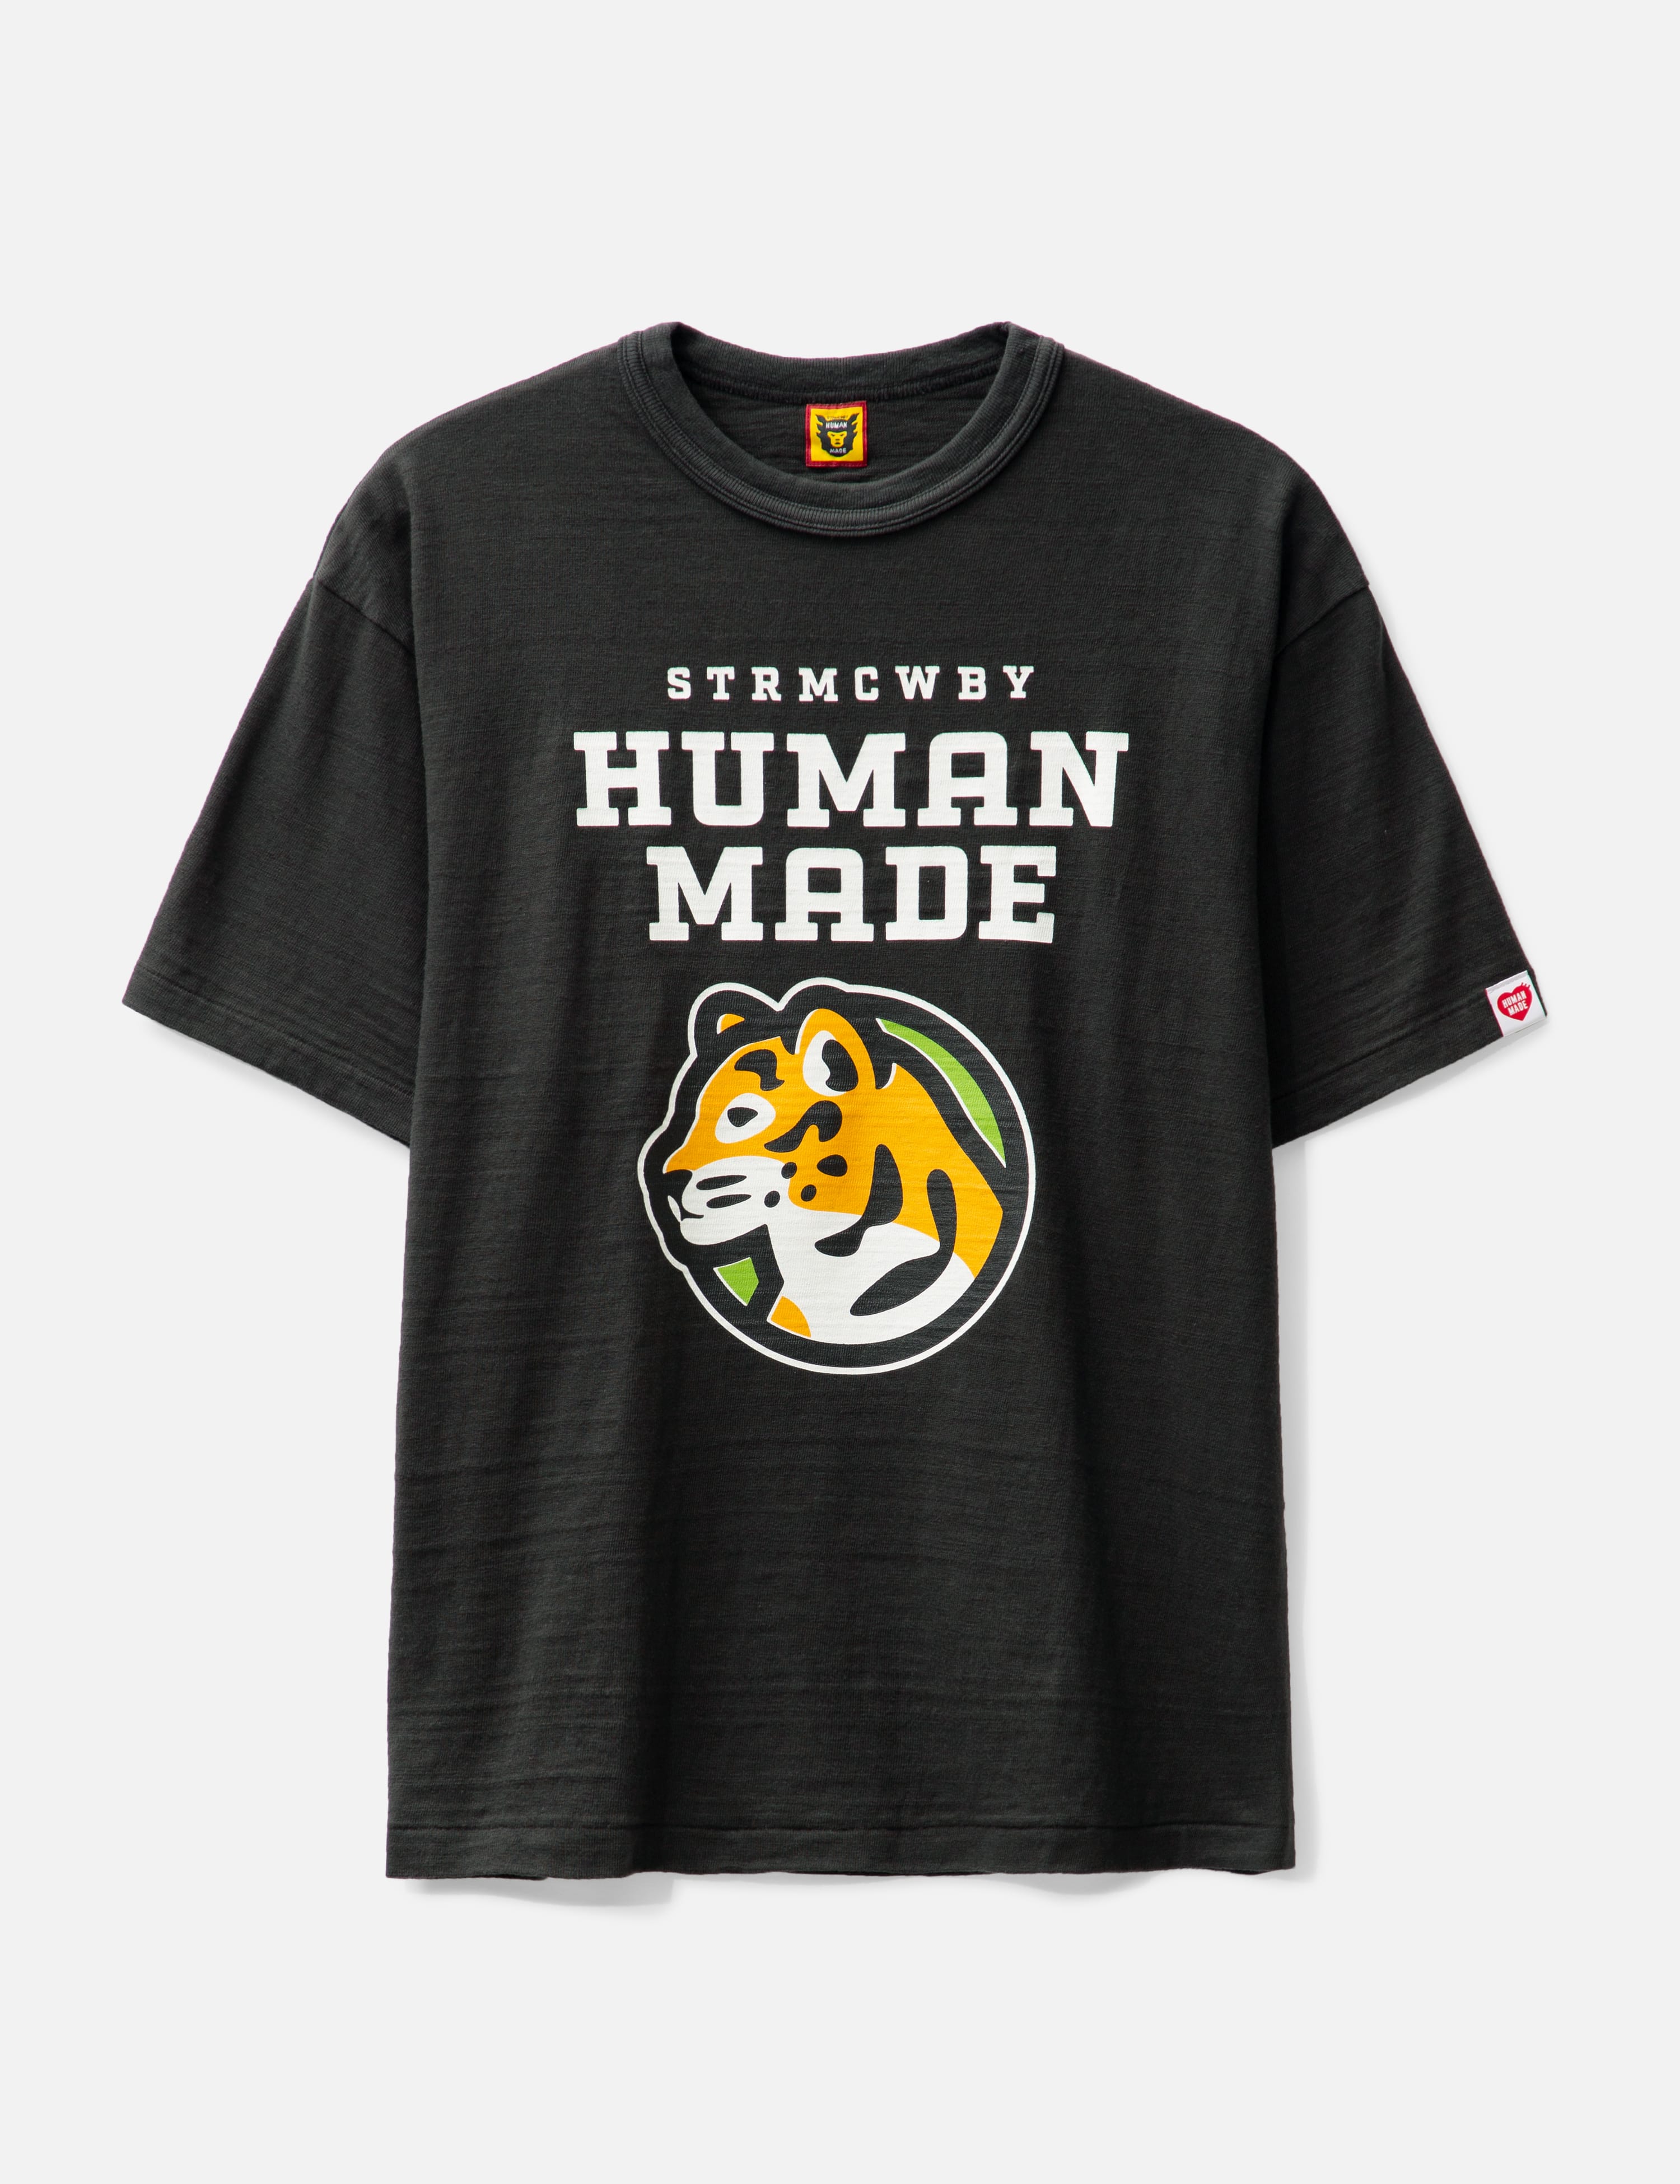 Human Made - T-shirt #2101 | HBX - ハイプビースト(Hypebeast)が厳選